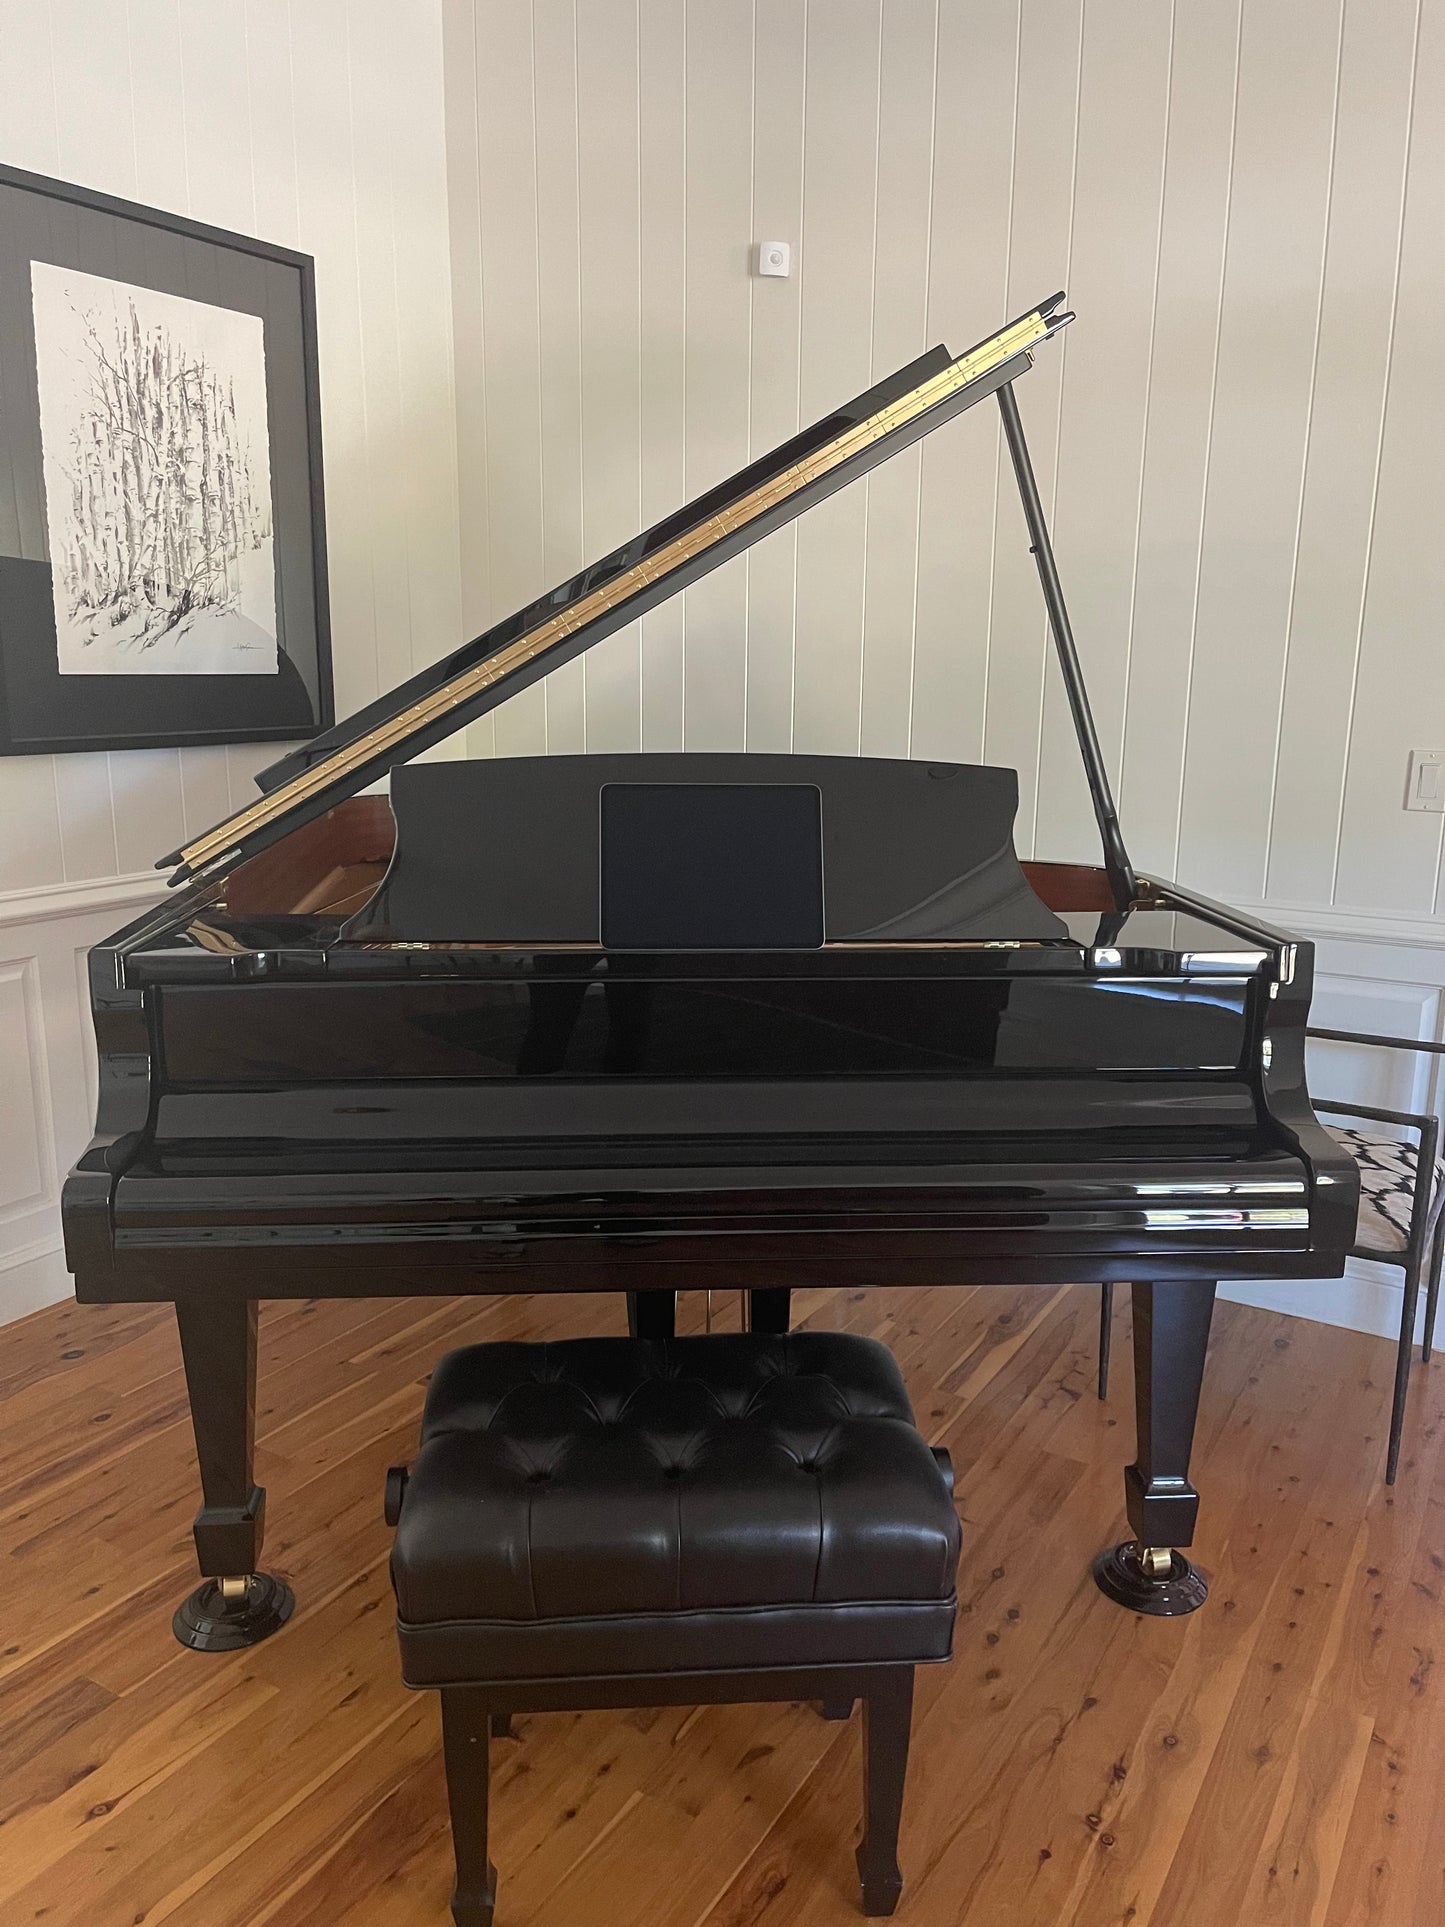 2022 Steinway Model B Spirio Record (R) Grand Piano with iPad | Los Angeles